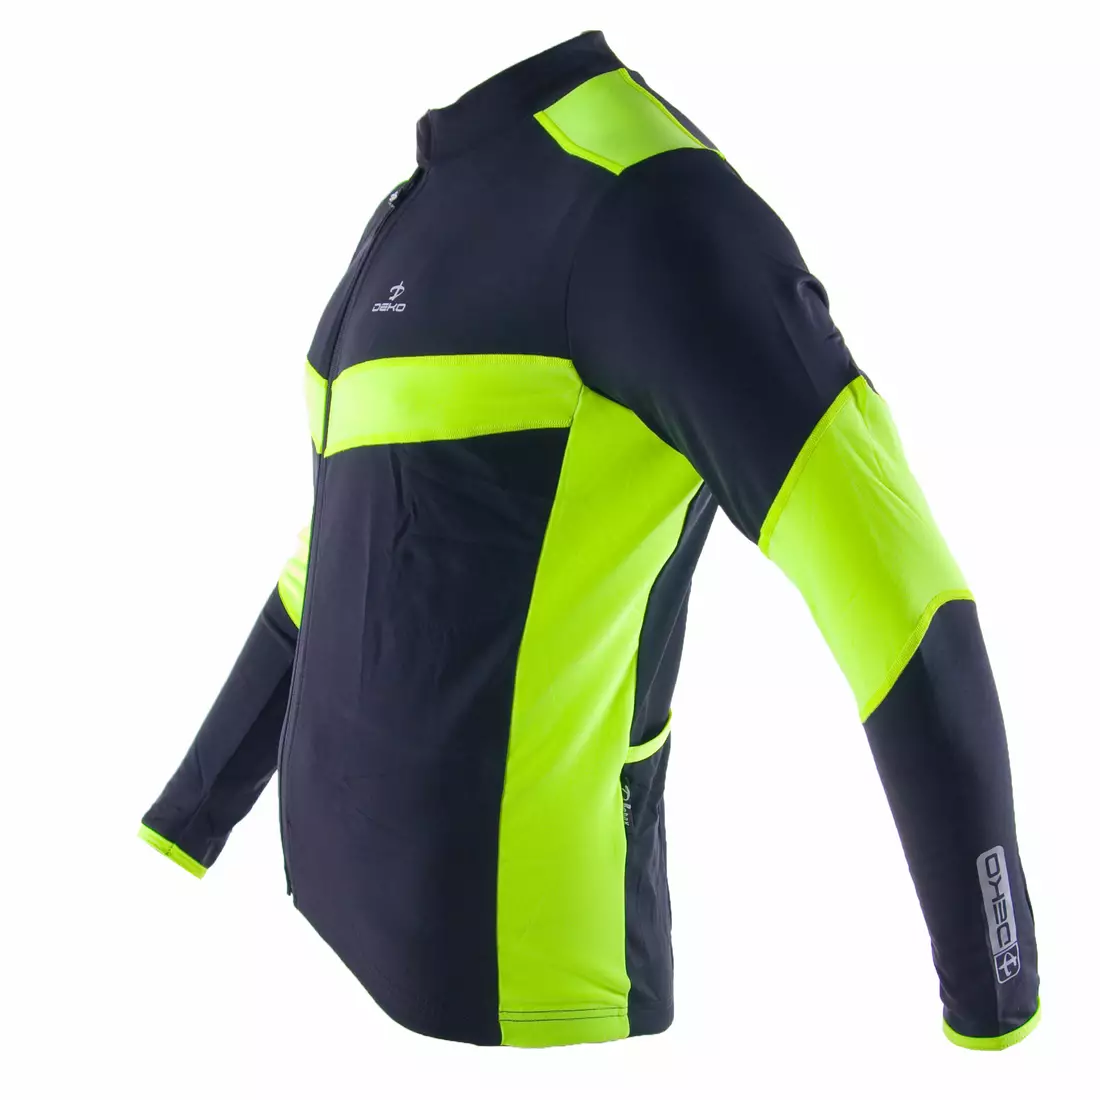 DEKO HUM D-Robax cycling sweatshirt black-fluor yellow